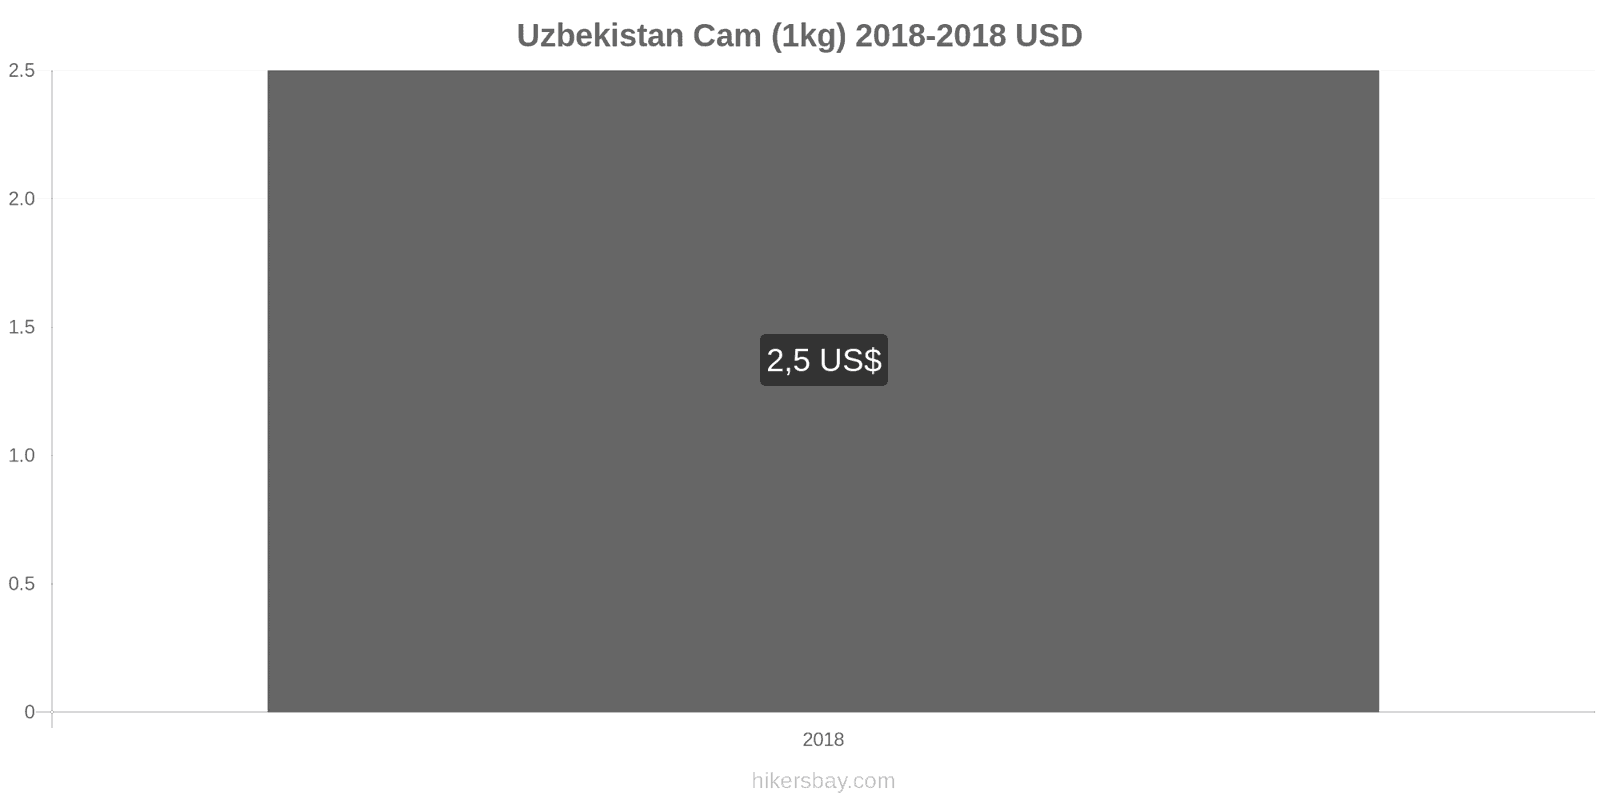 Uzbekistan thay đổi giá cả Cam (1kg) hikersbay.com